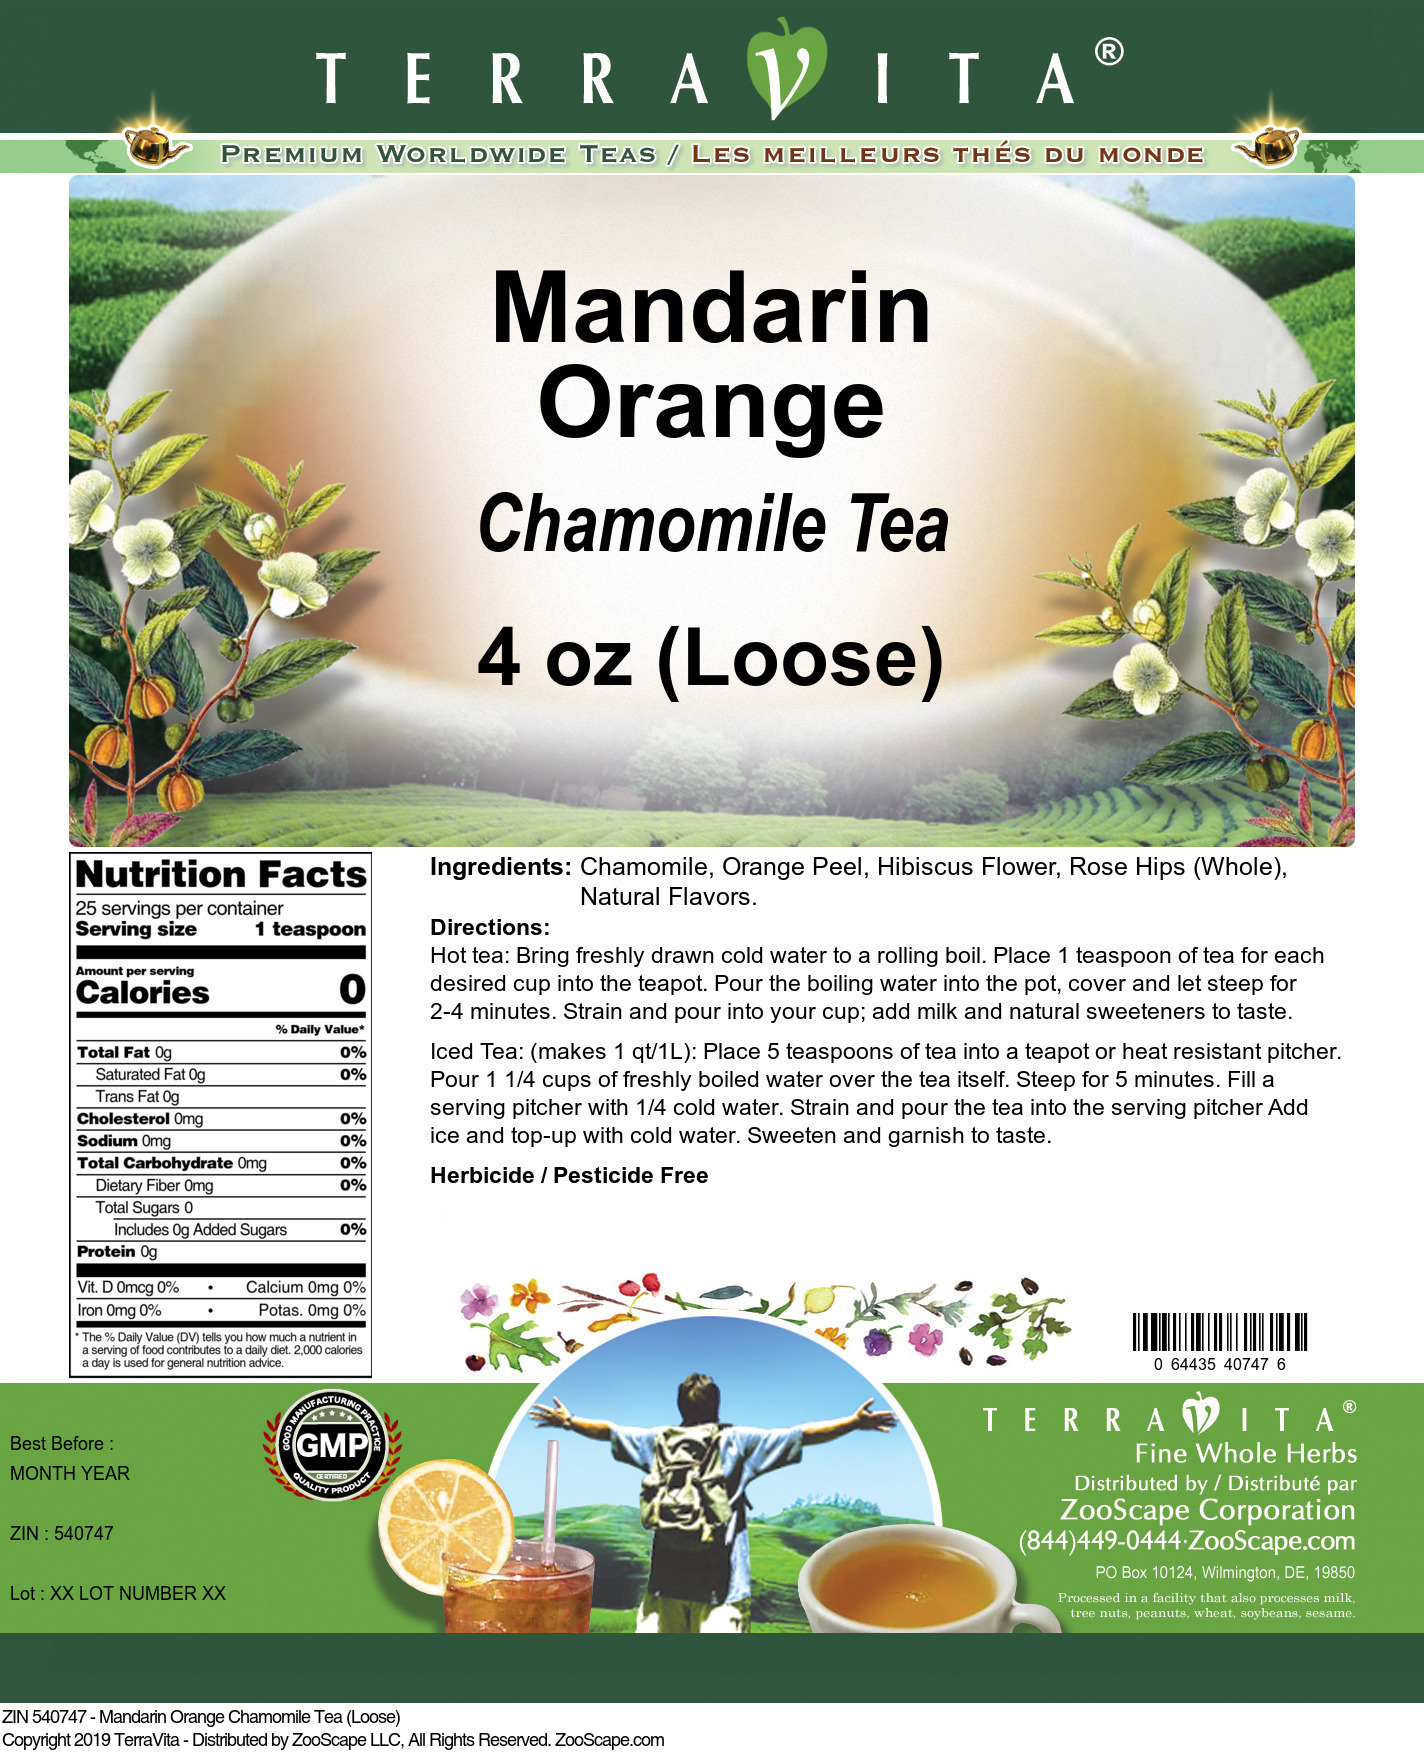 Mandarin Orange Chamomile Tea (Loose) - Label